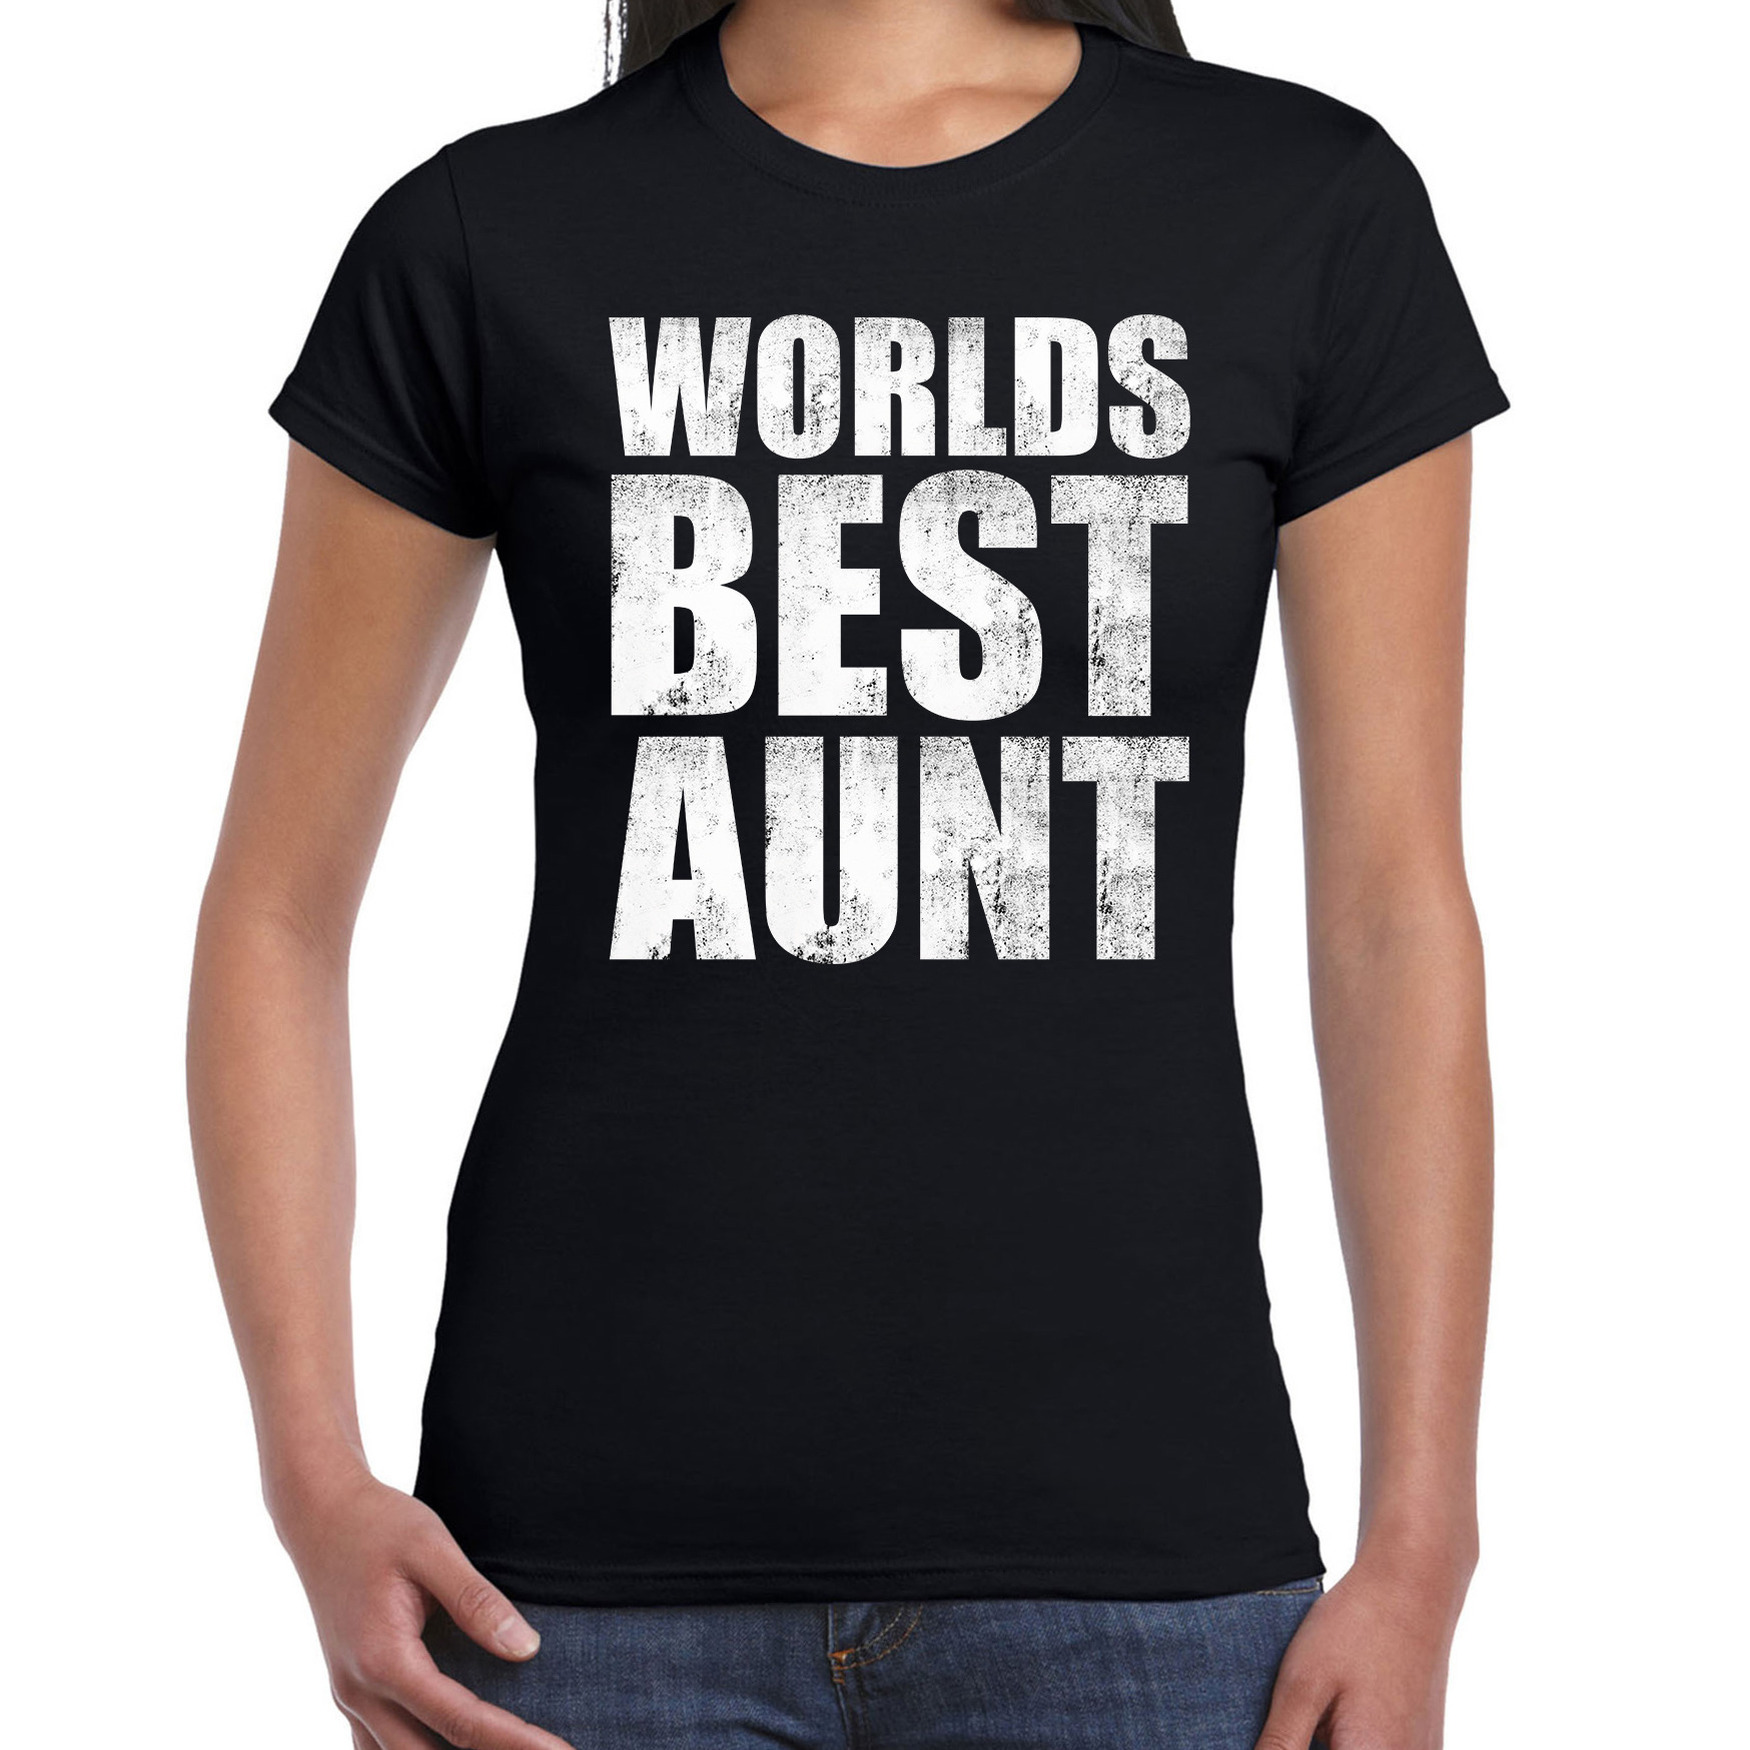 Worlds best aunt-tante cadeau t-shirt zwart voor dames